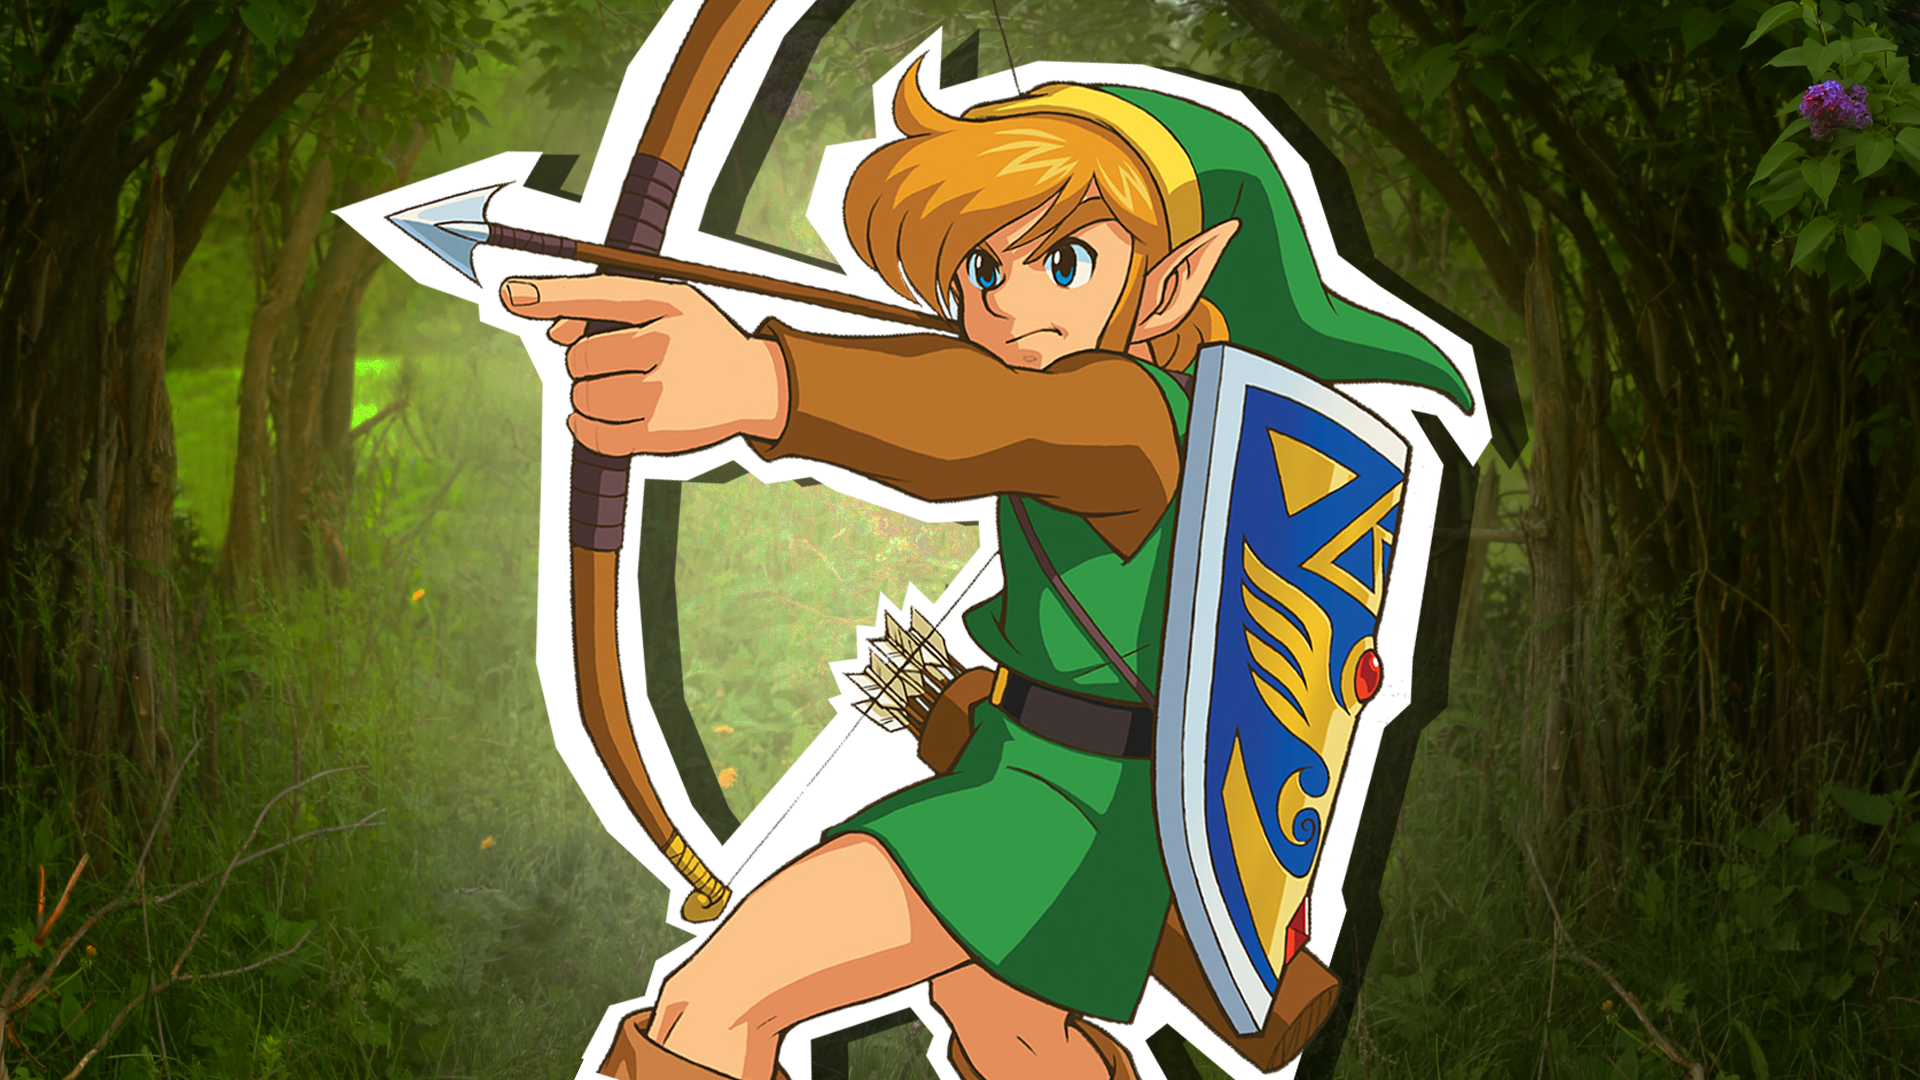 Link, preparing to fire an arrow